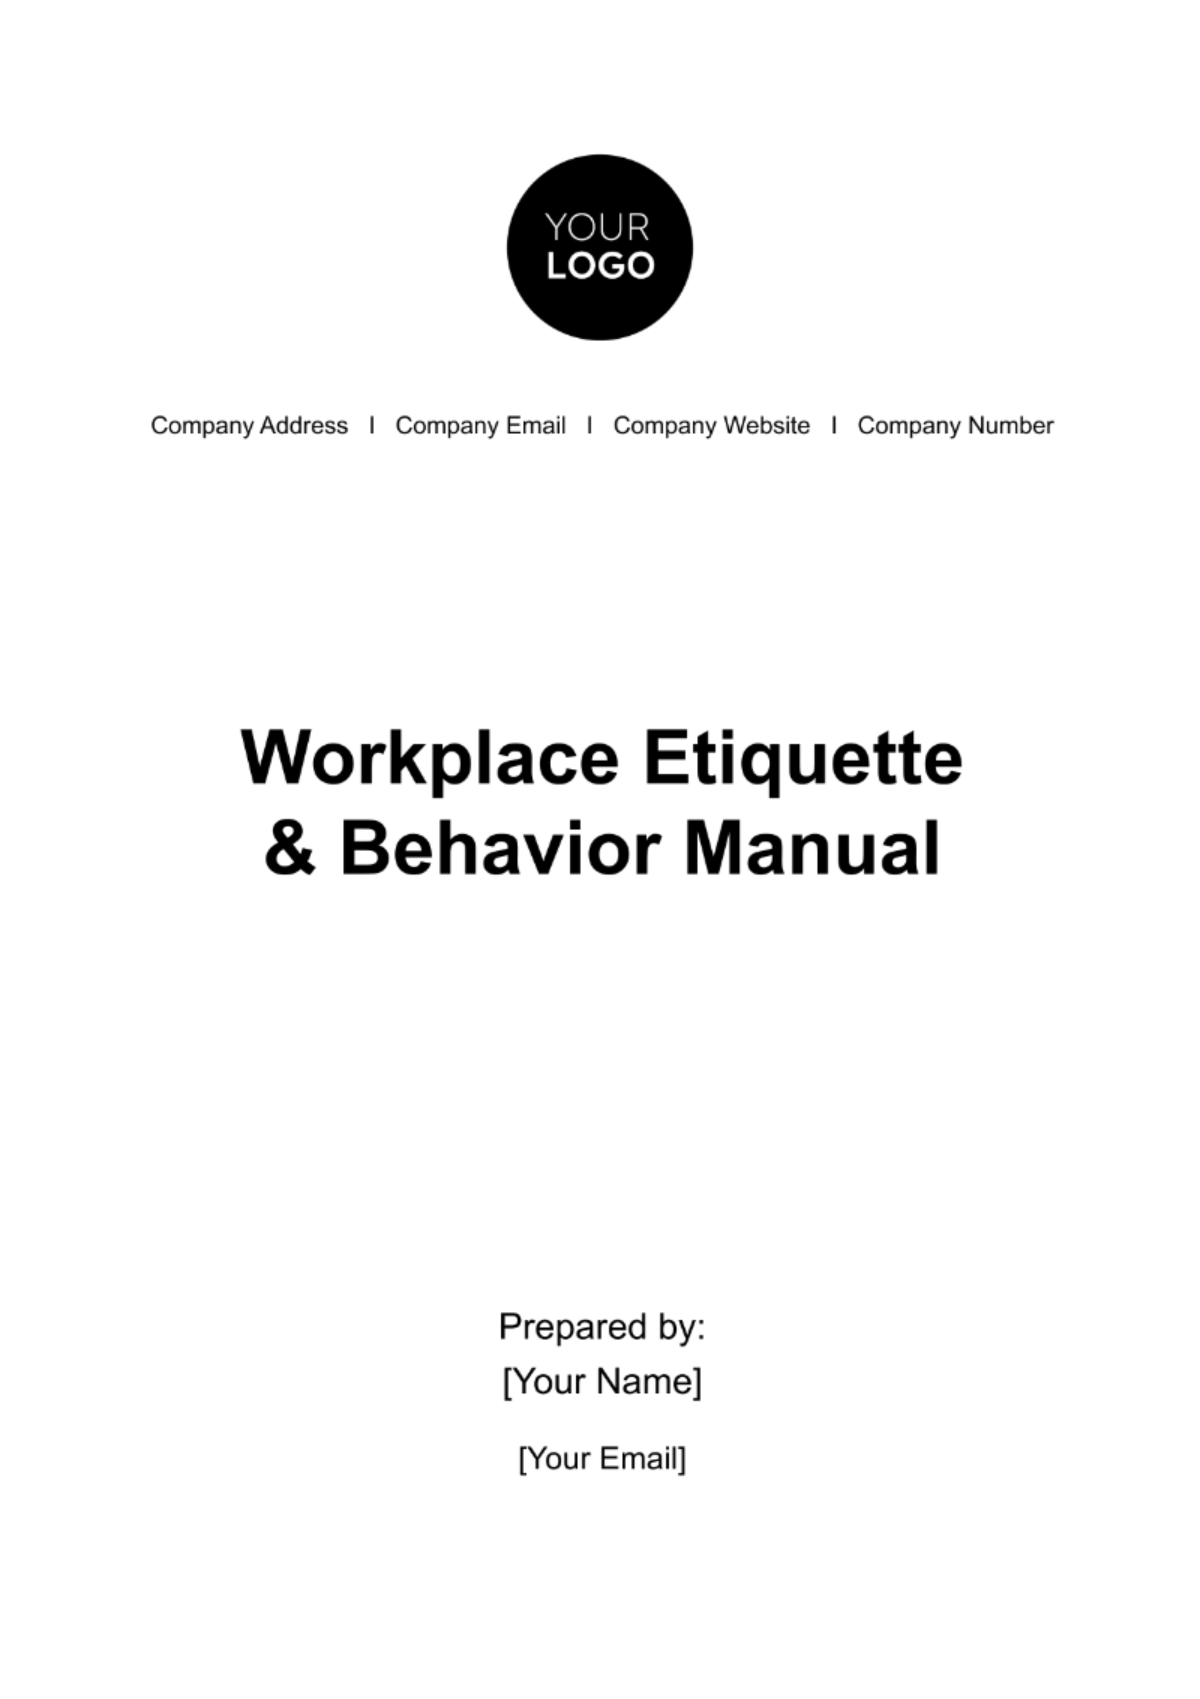 Workplace Etiquette & Behavior Manual HR Template